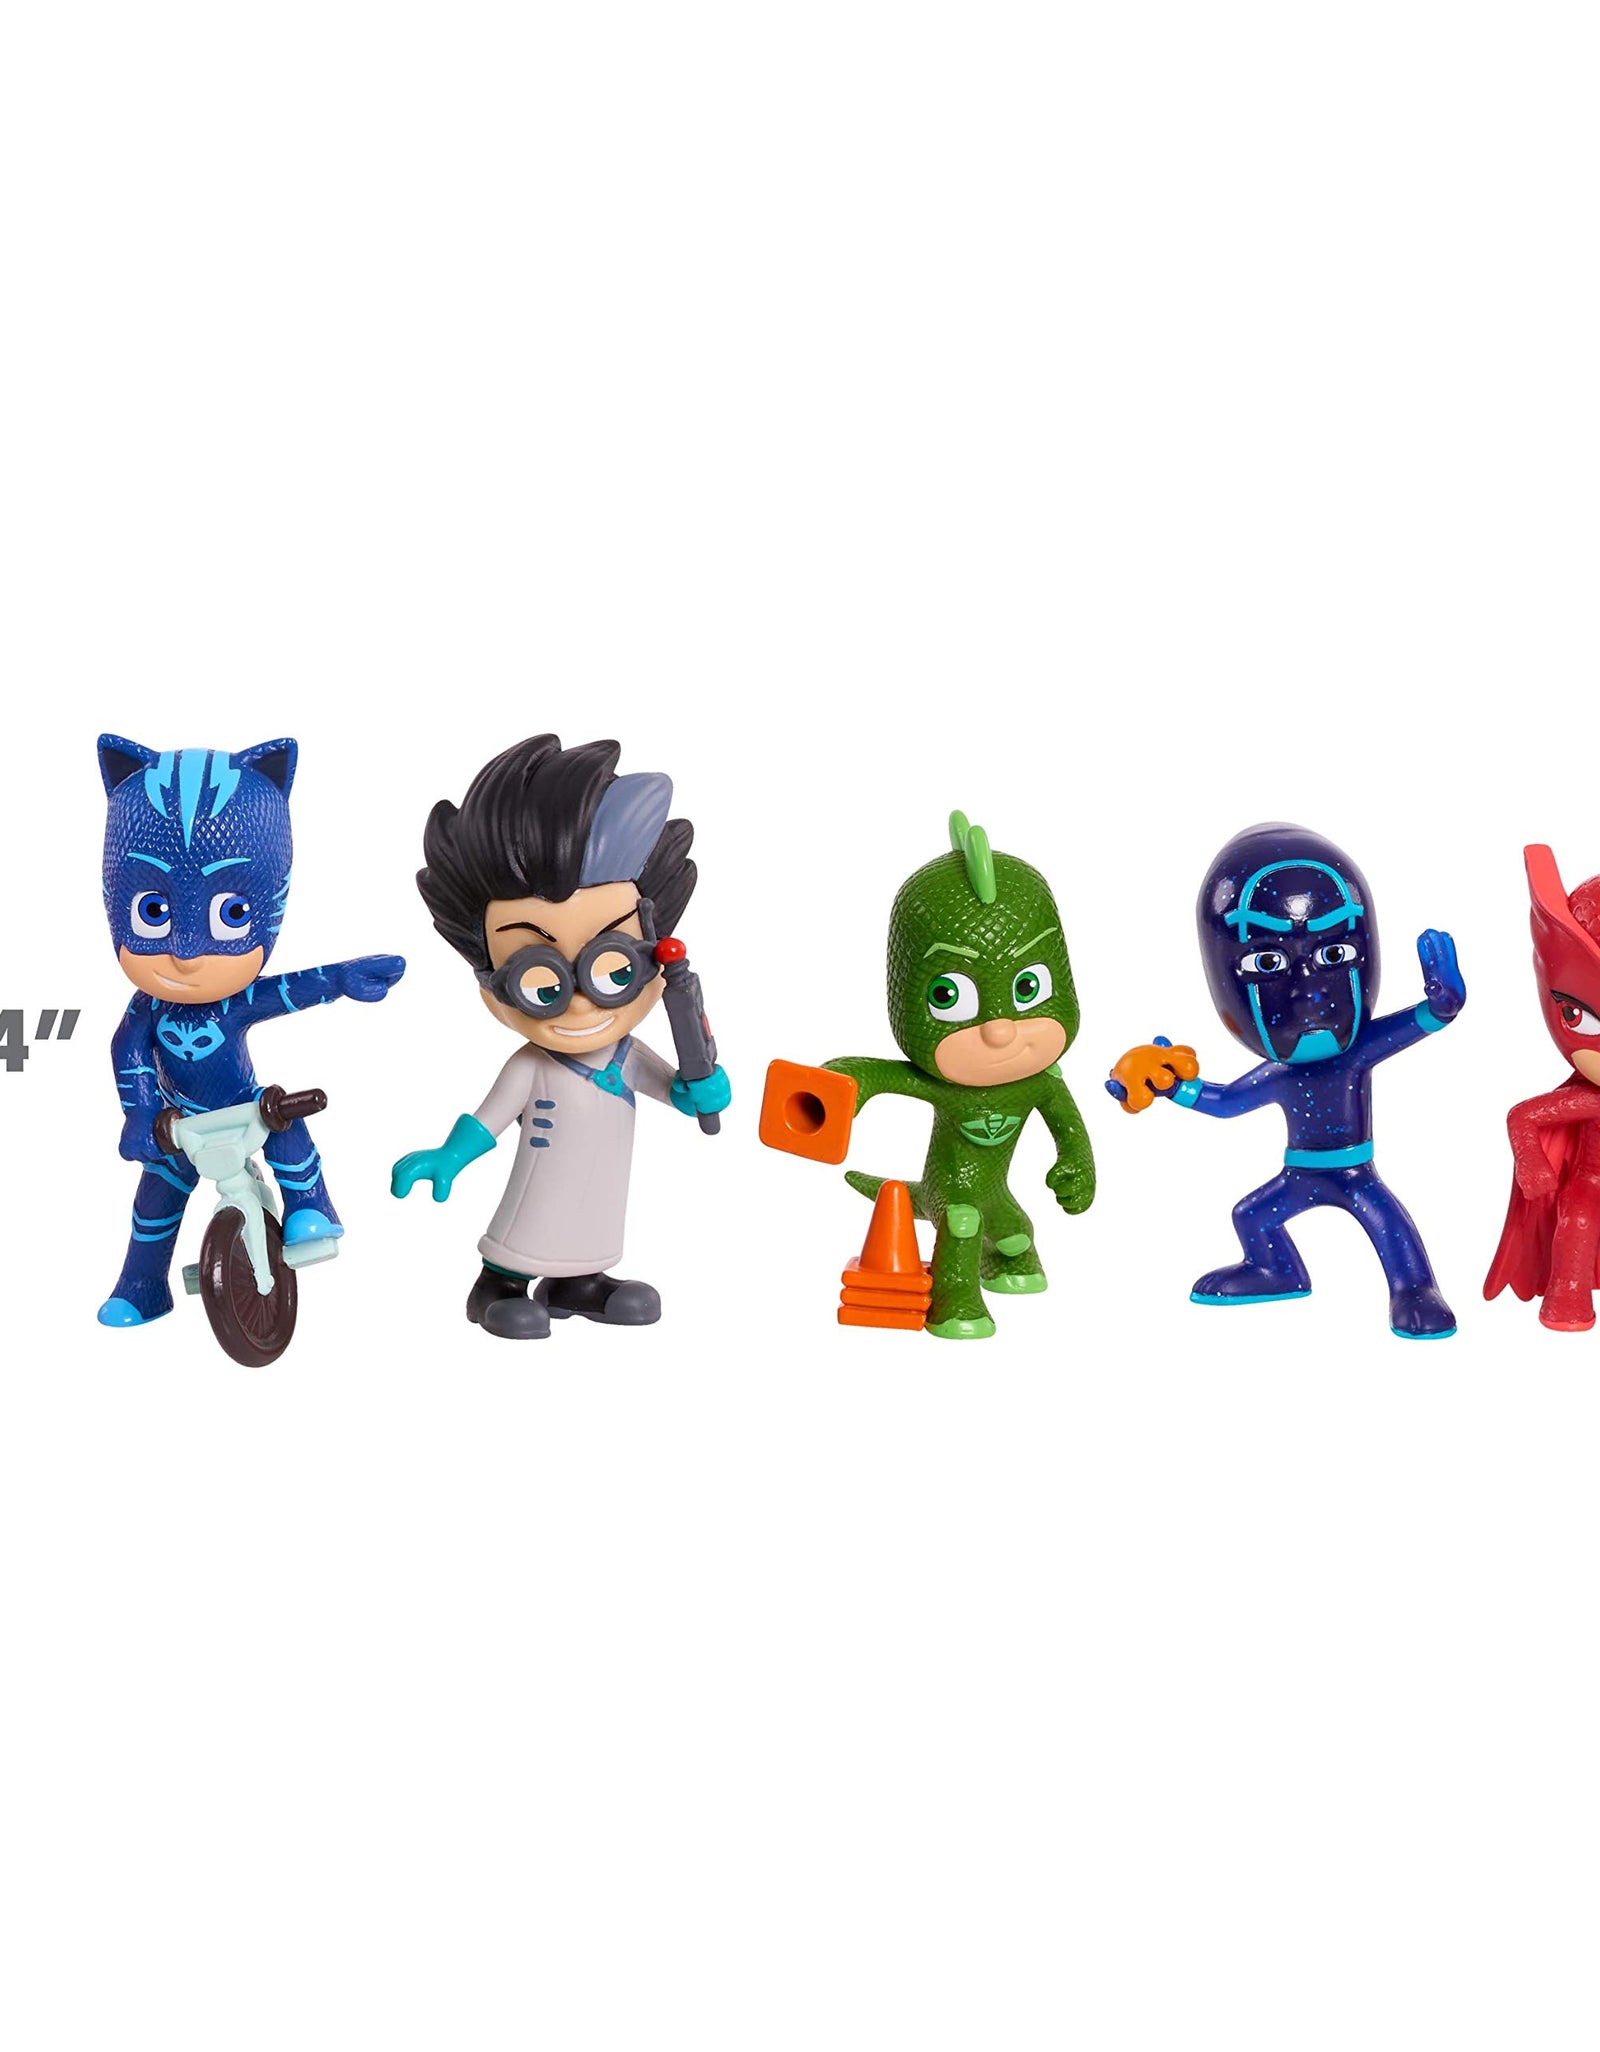 PJ Masks Just Play Collectible 5-Piece Figure Set,Catboy, Owlette, Gekko, Romeo, and Night Ninja